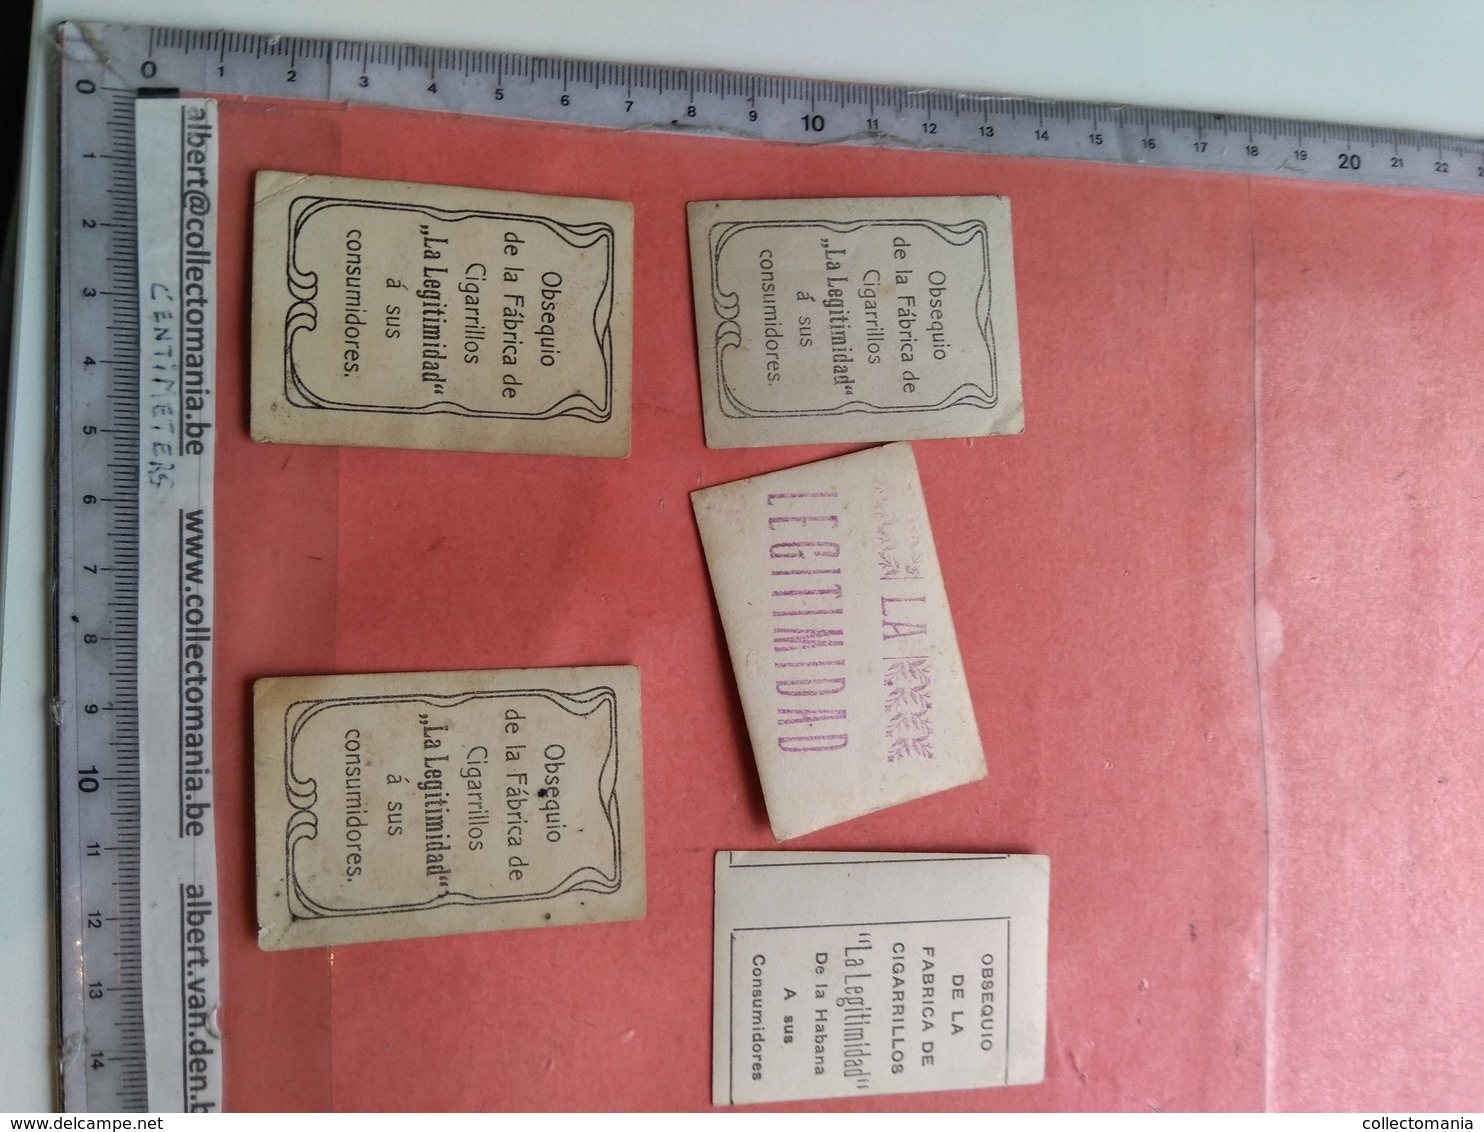 ANOS approx 1900,  real photos 5,5 cmX4cm, LA LEGITIMIDAD Cuba Cigarillos HABANA 19 different cigarette cards